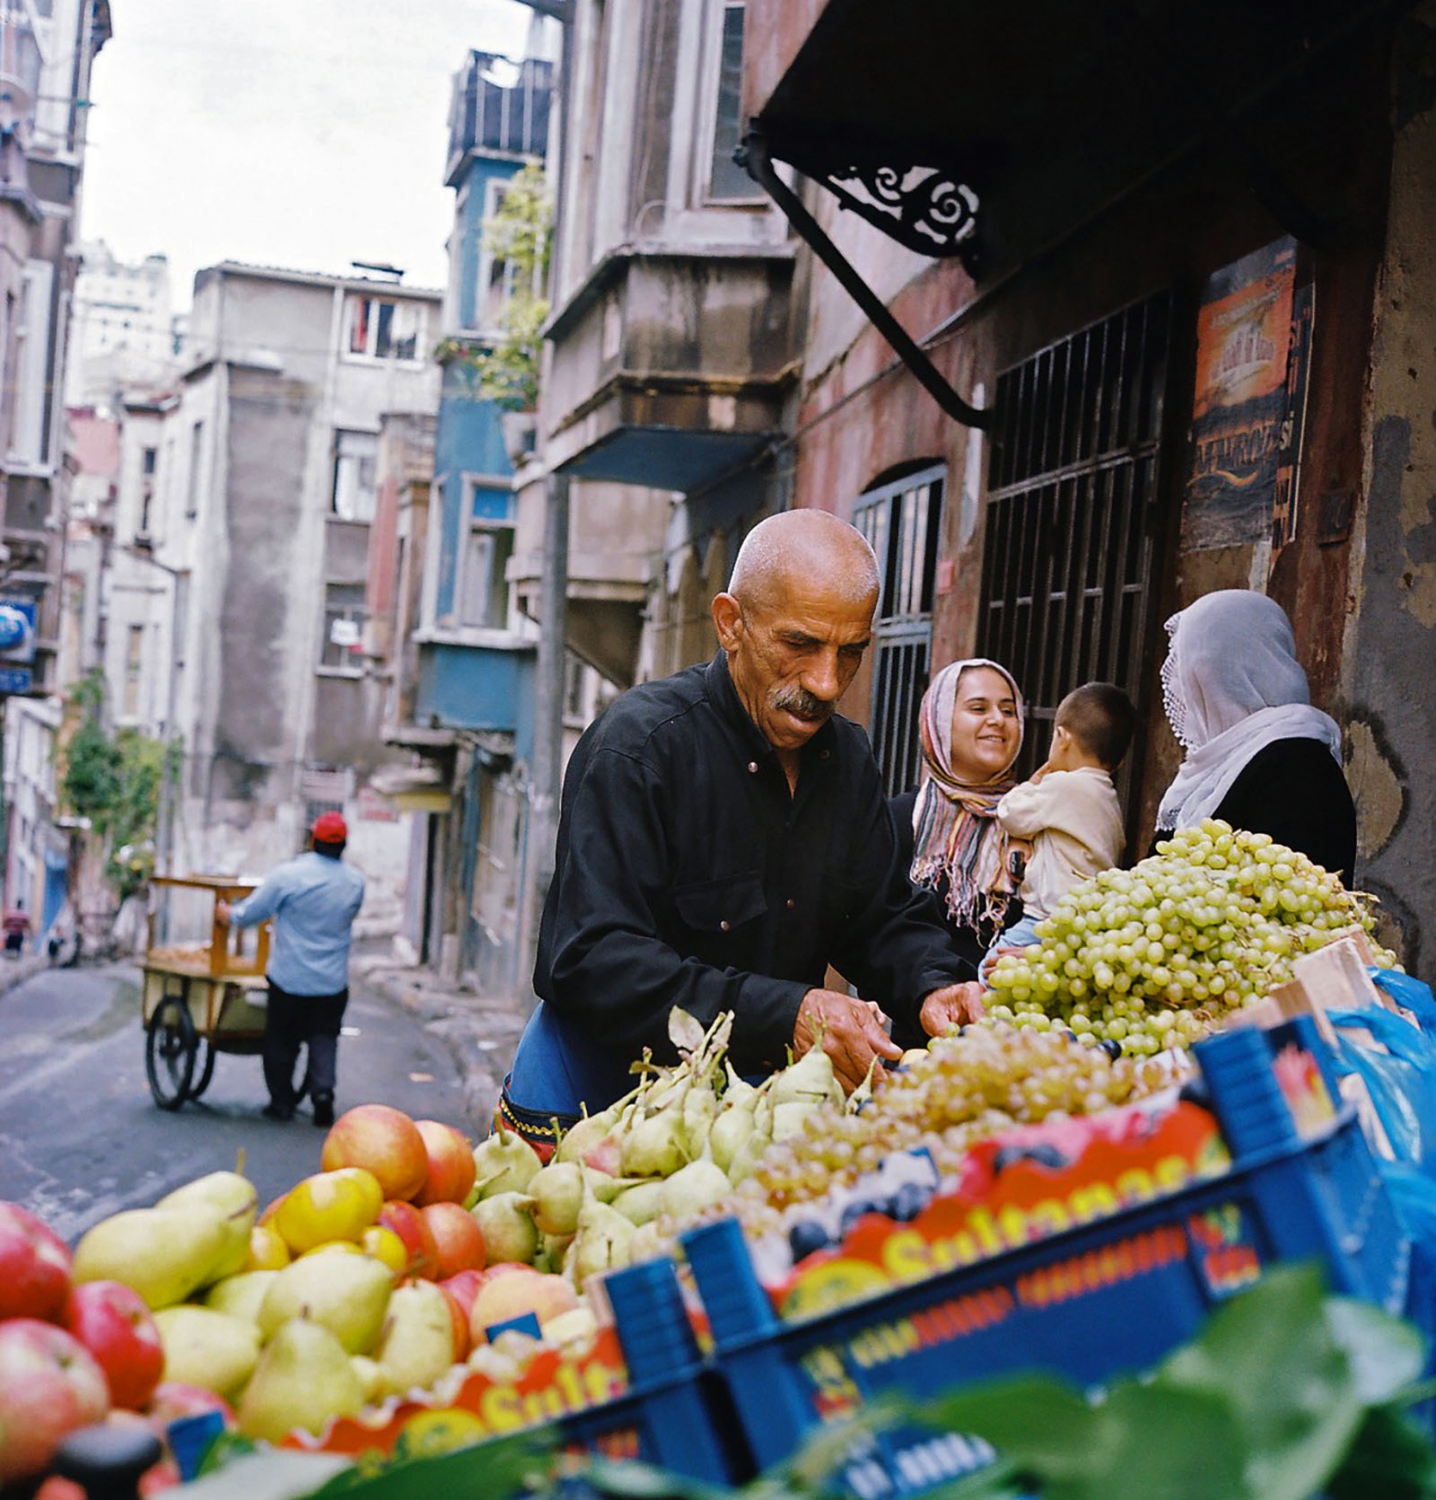 Fruit vendor in Tarlabasi. Istanbul, Turkey.Â September 2011 